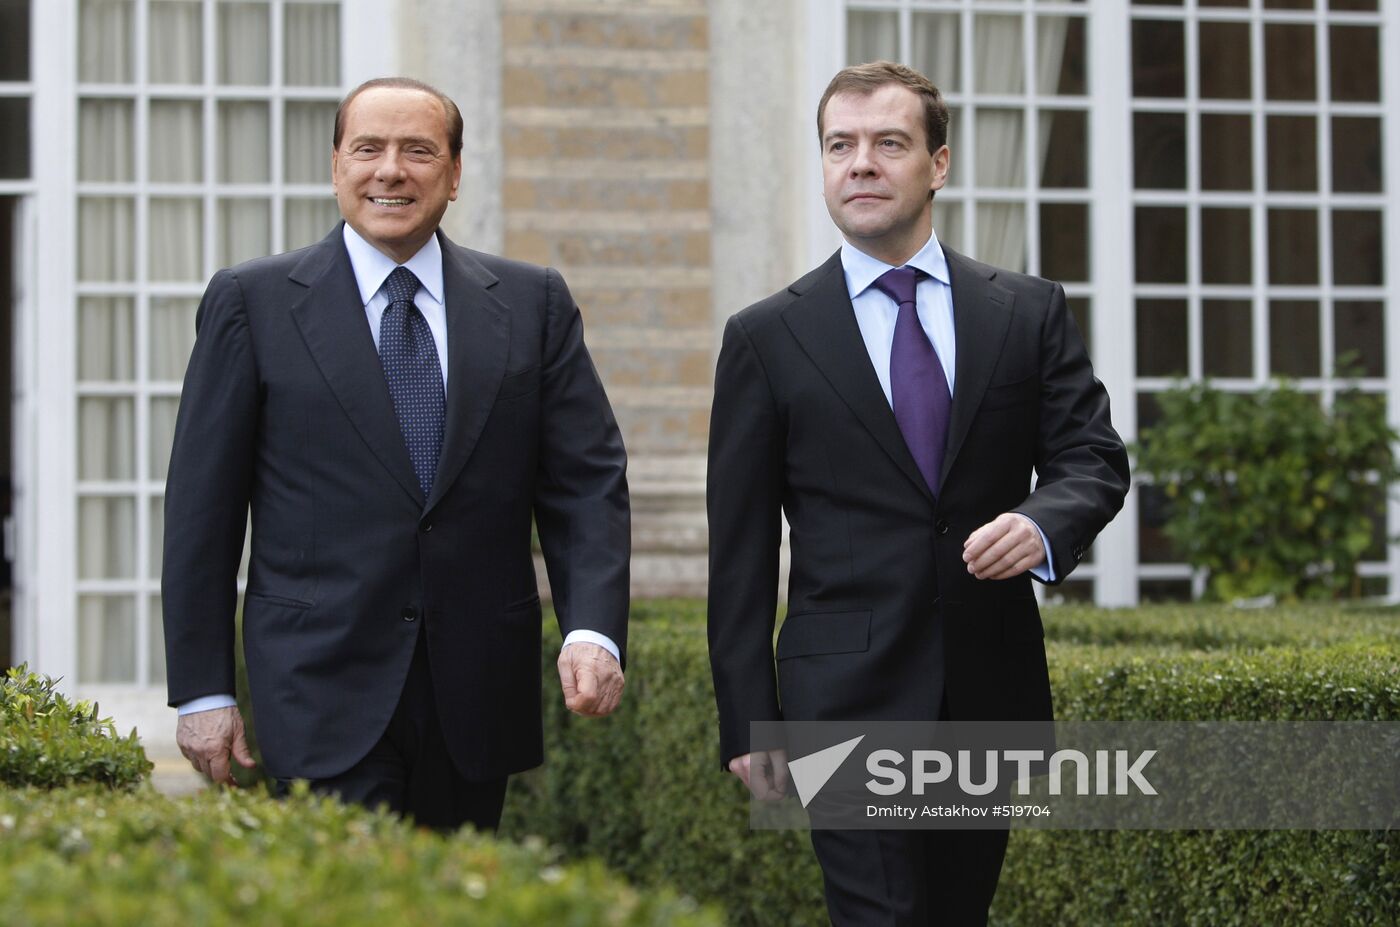 Dmitry Medvedev attends photo session